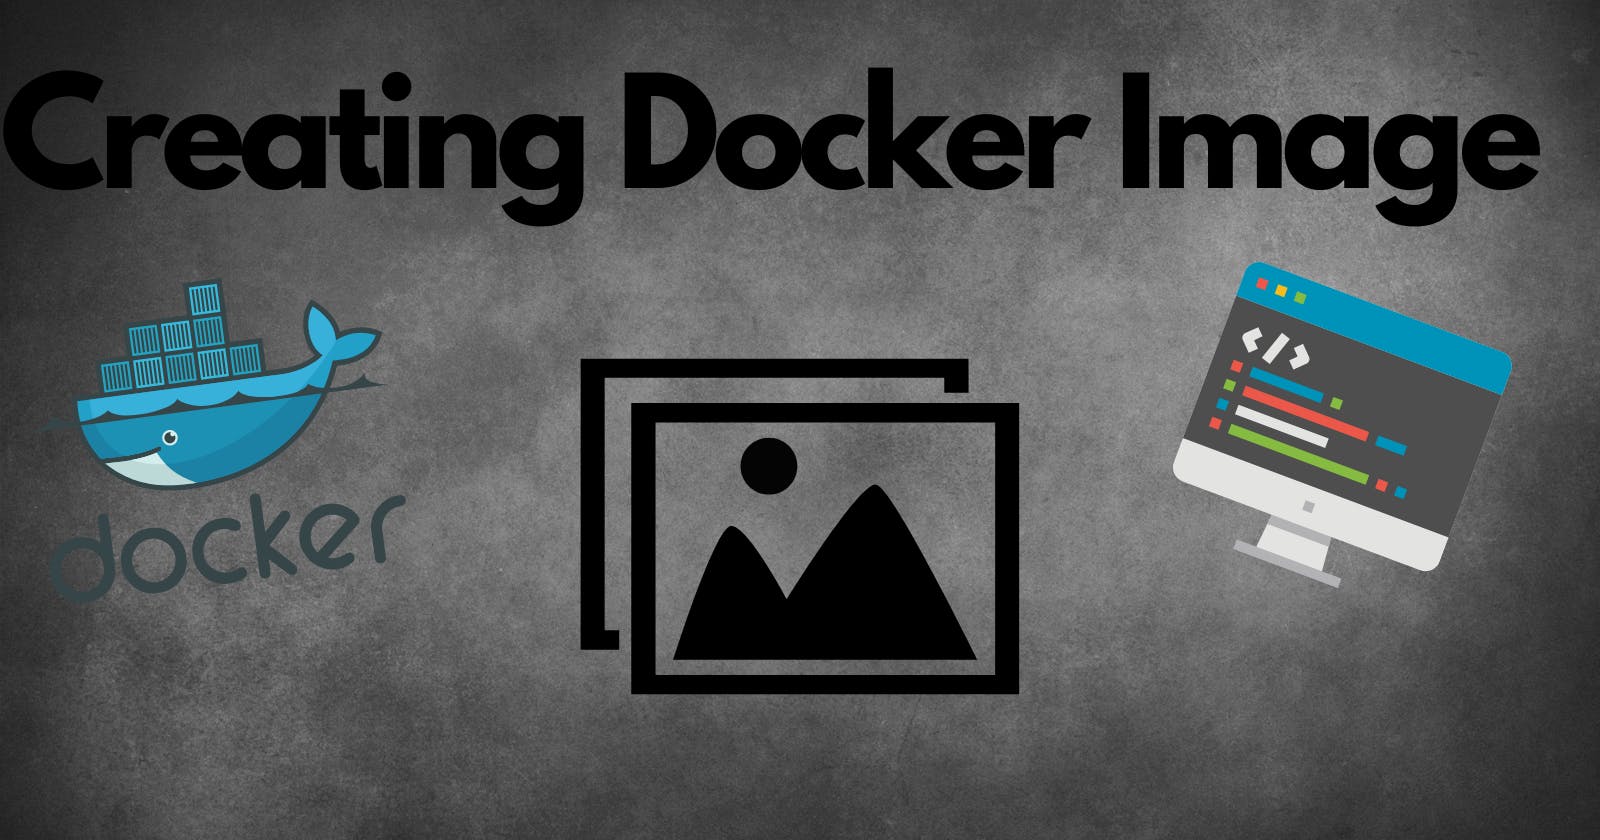 Creating a docker image